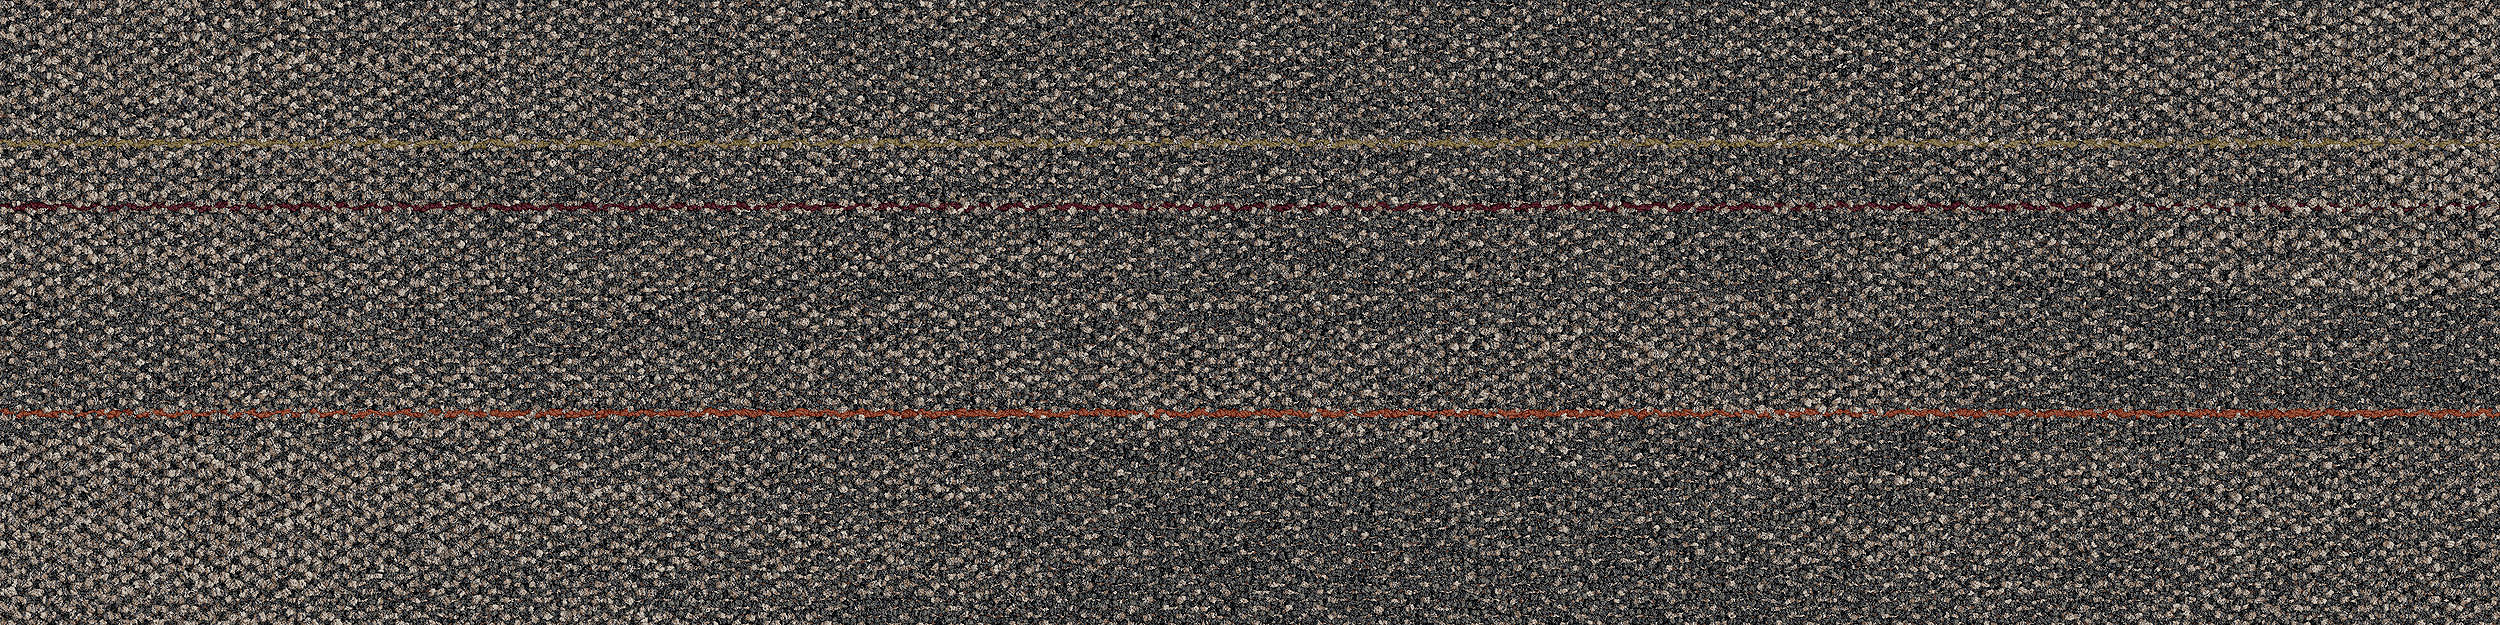 Open Air 410 Stria Carpet Tile In Granite imagen número 4